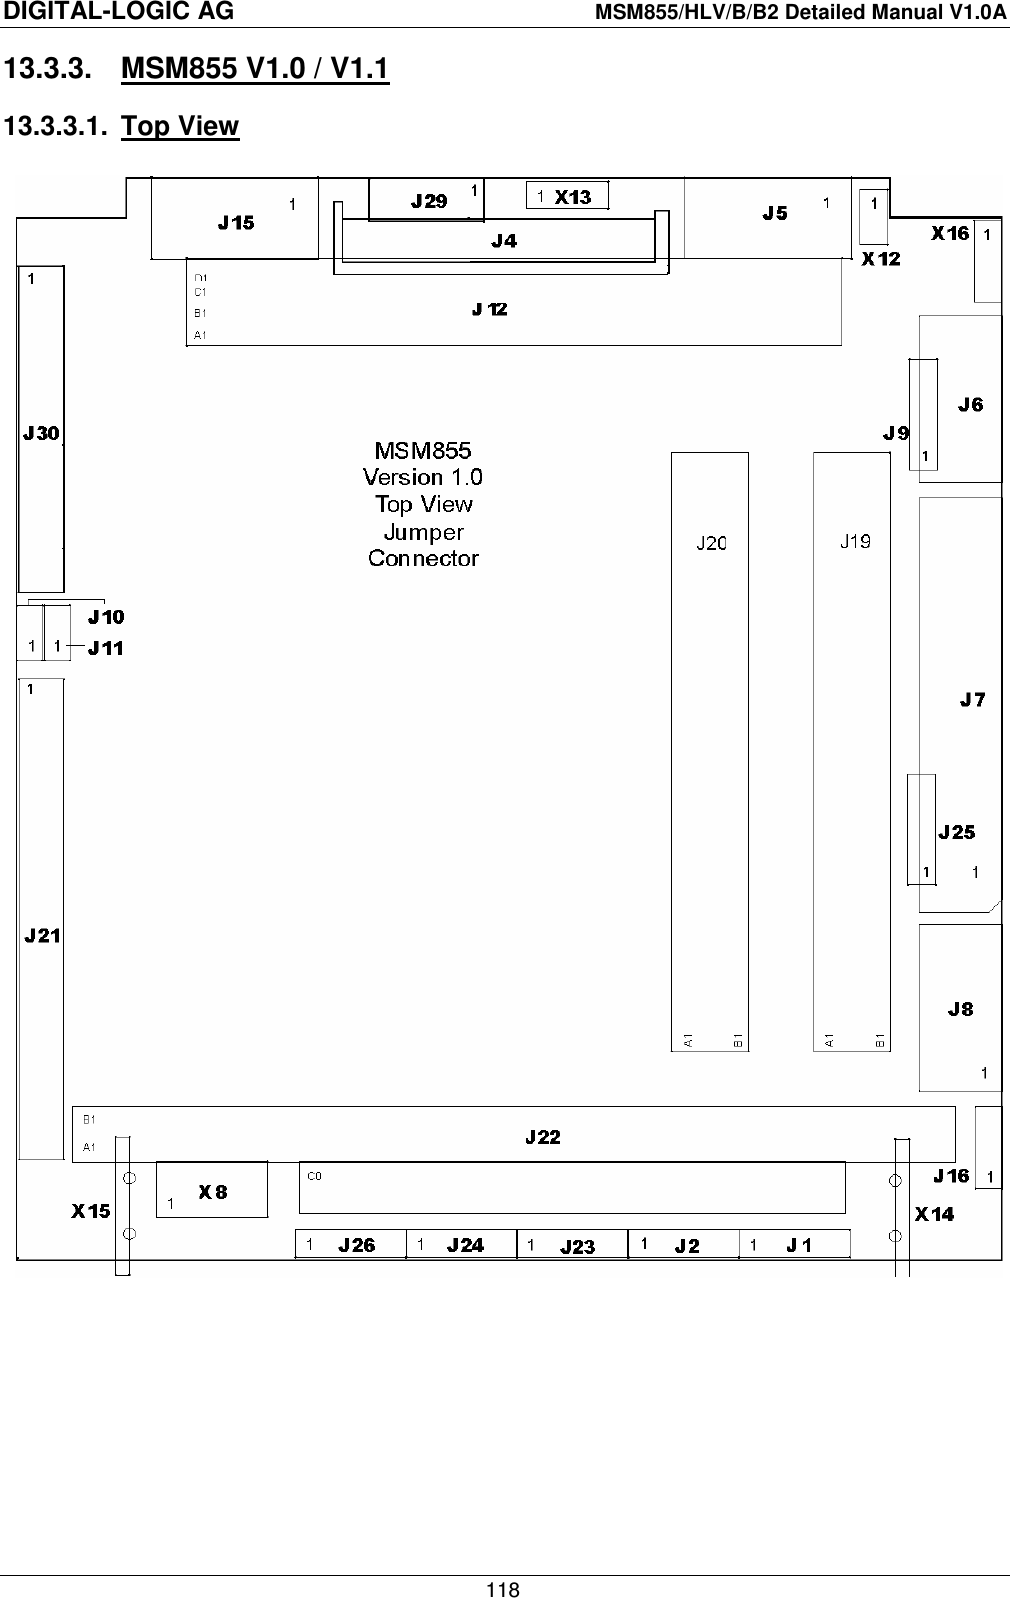 DIGITAL-LOGIC AG    MSM855/HLV/B/B2 Detailed Manual V1.0A    118 13.3.3.  MSM855 V1.0 / V1.1 13.3.3.1.  Top View   